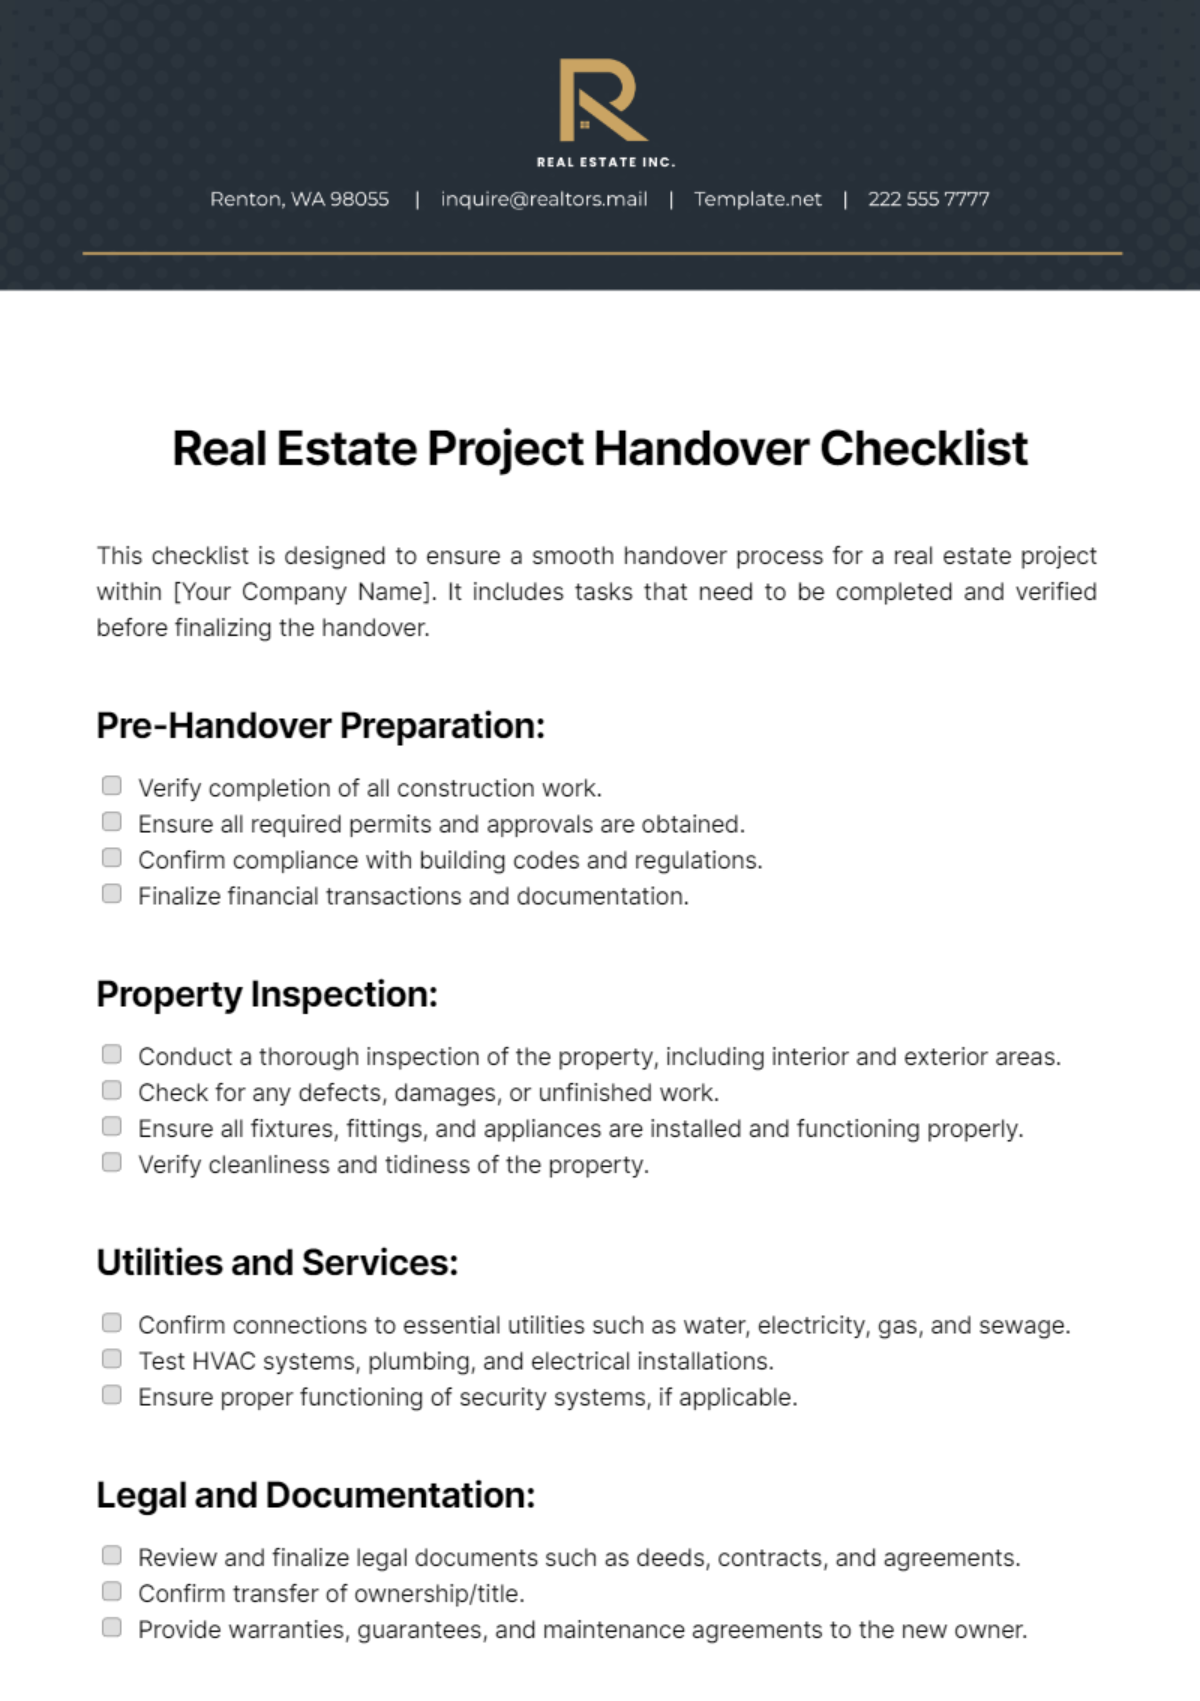 Real Estate Project Handover Checklist Template